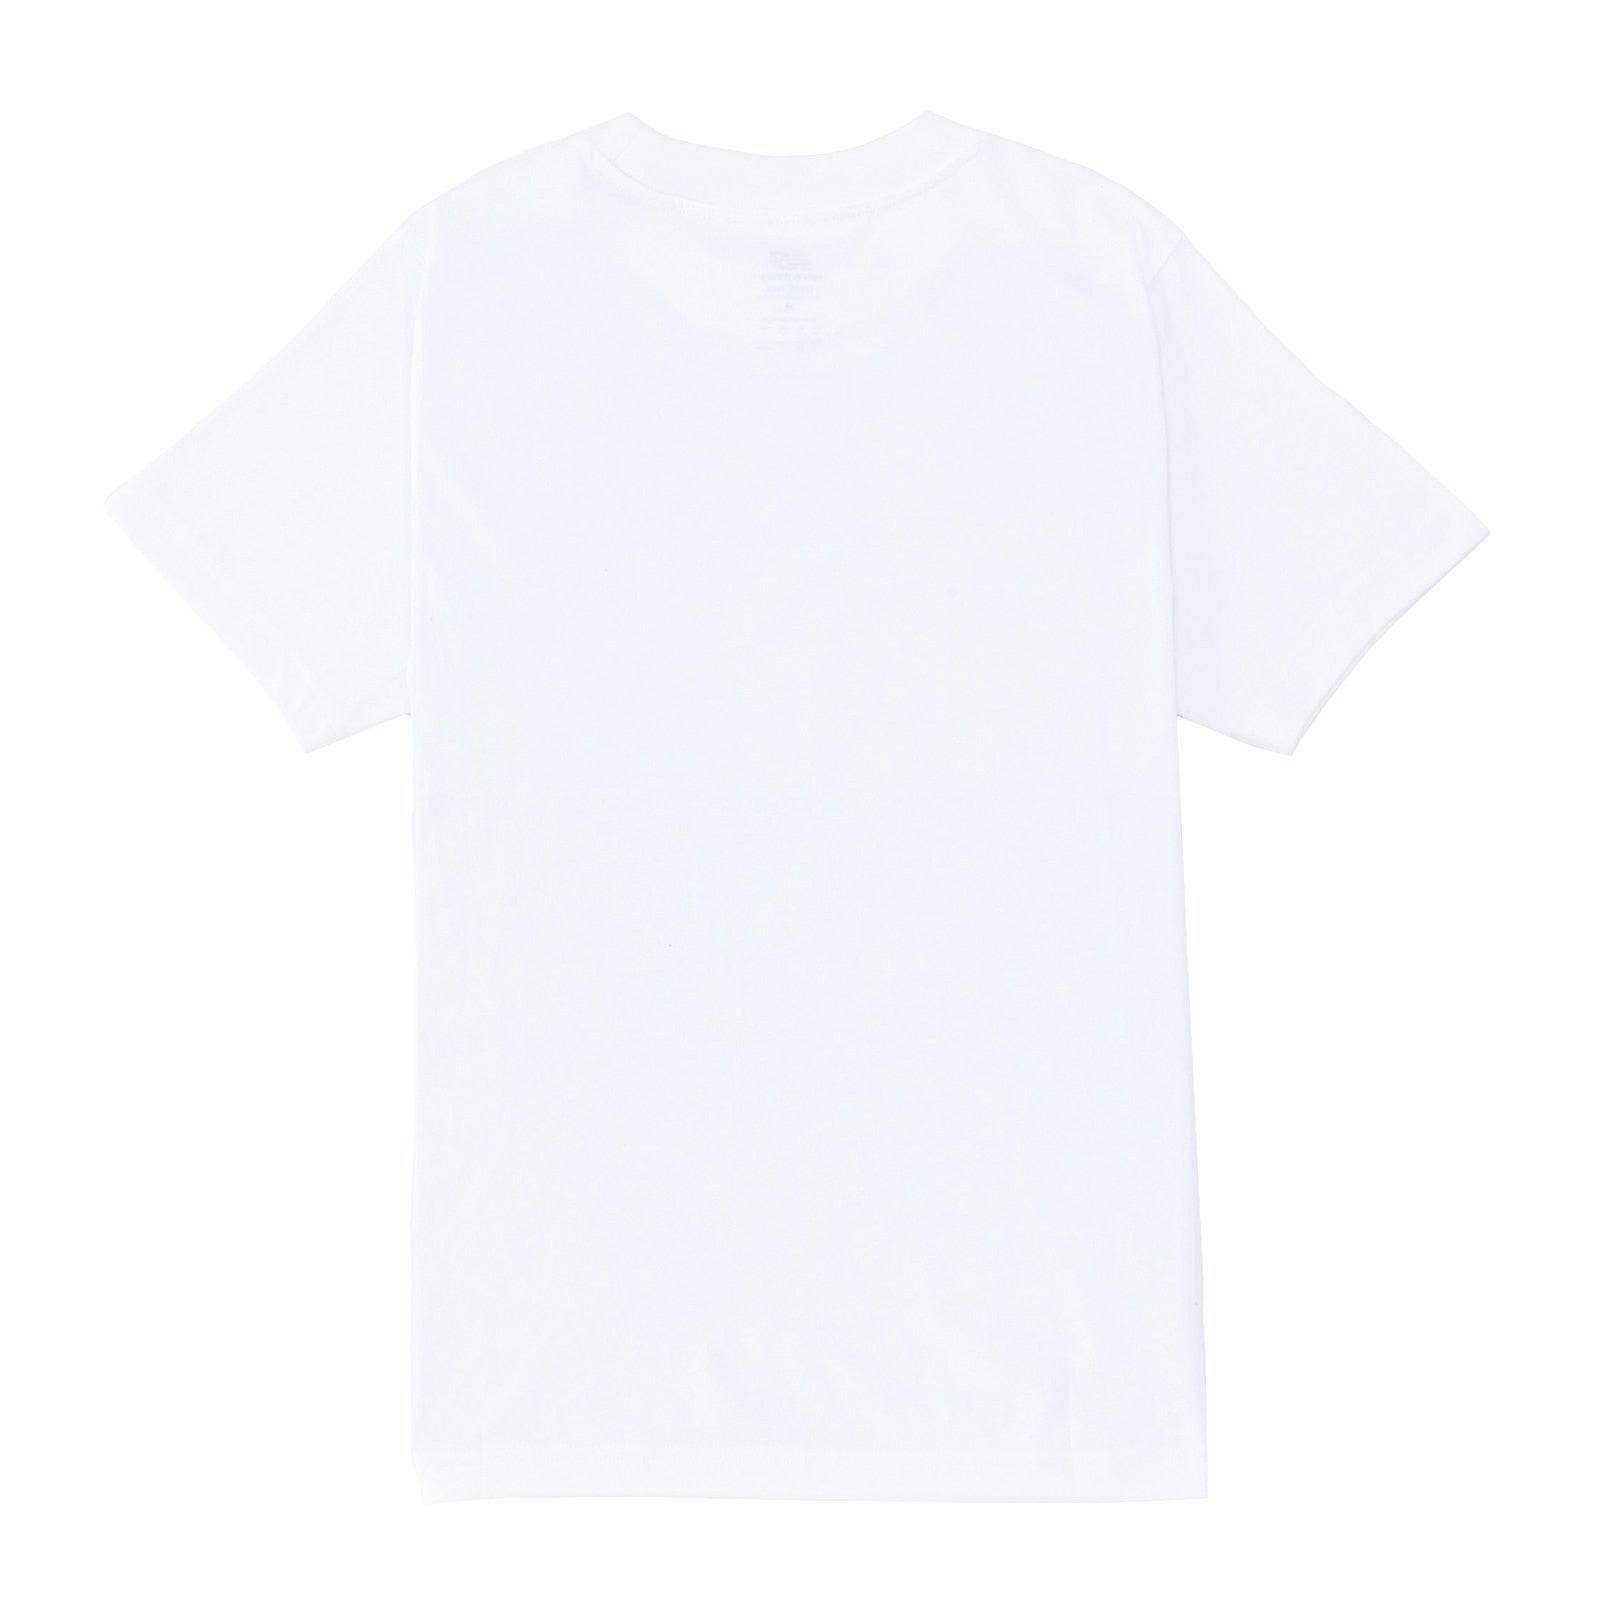 The Unicorn graphic short sleeve t-shirt